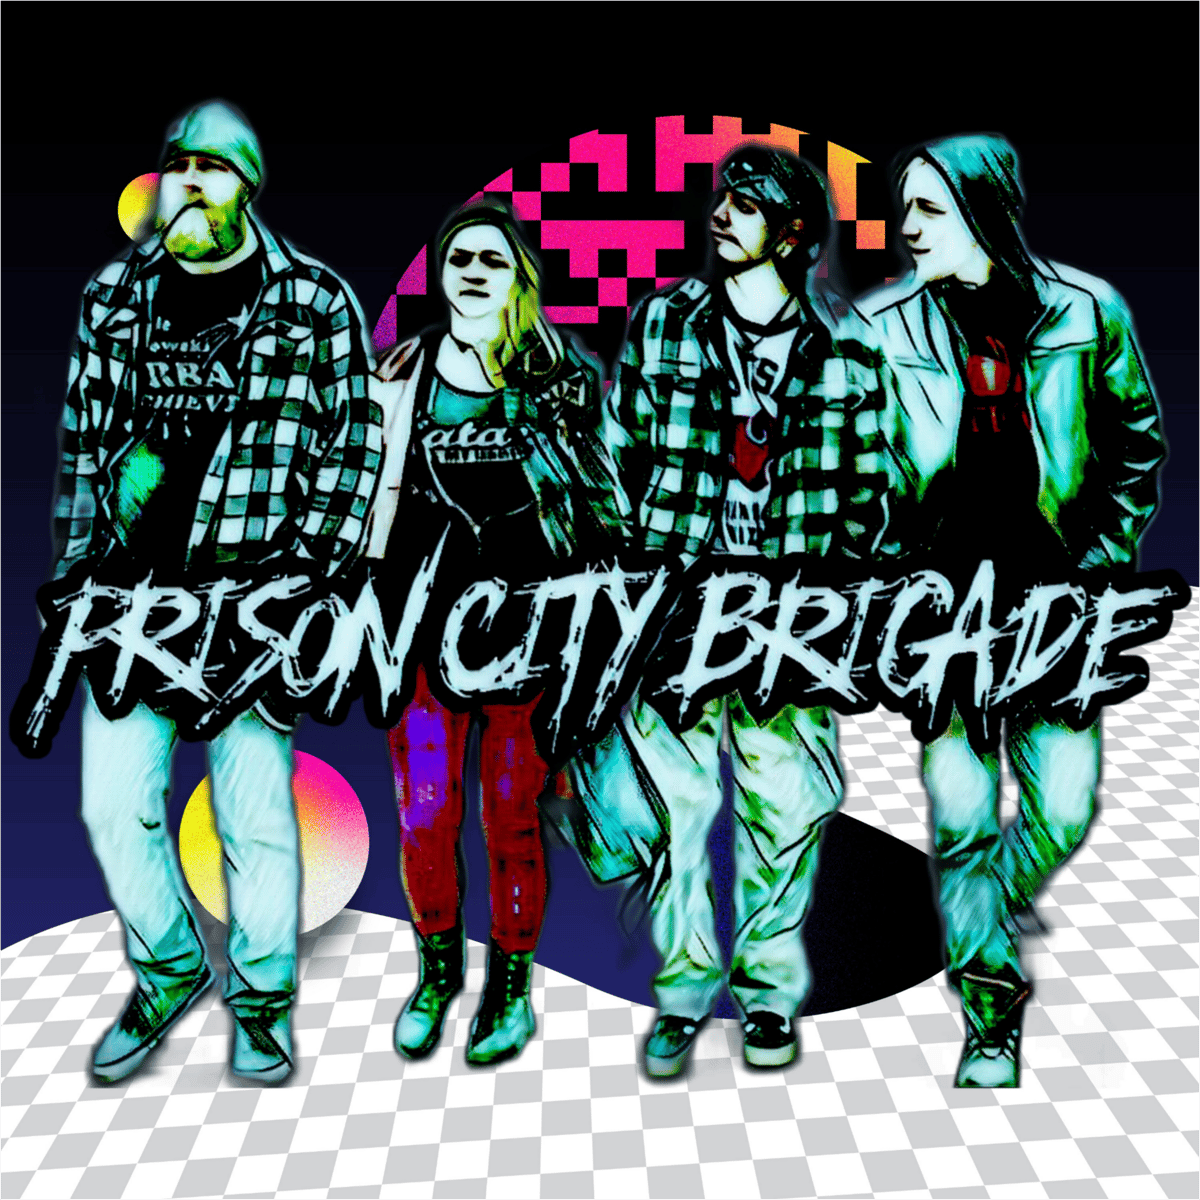 Prison City Brigade